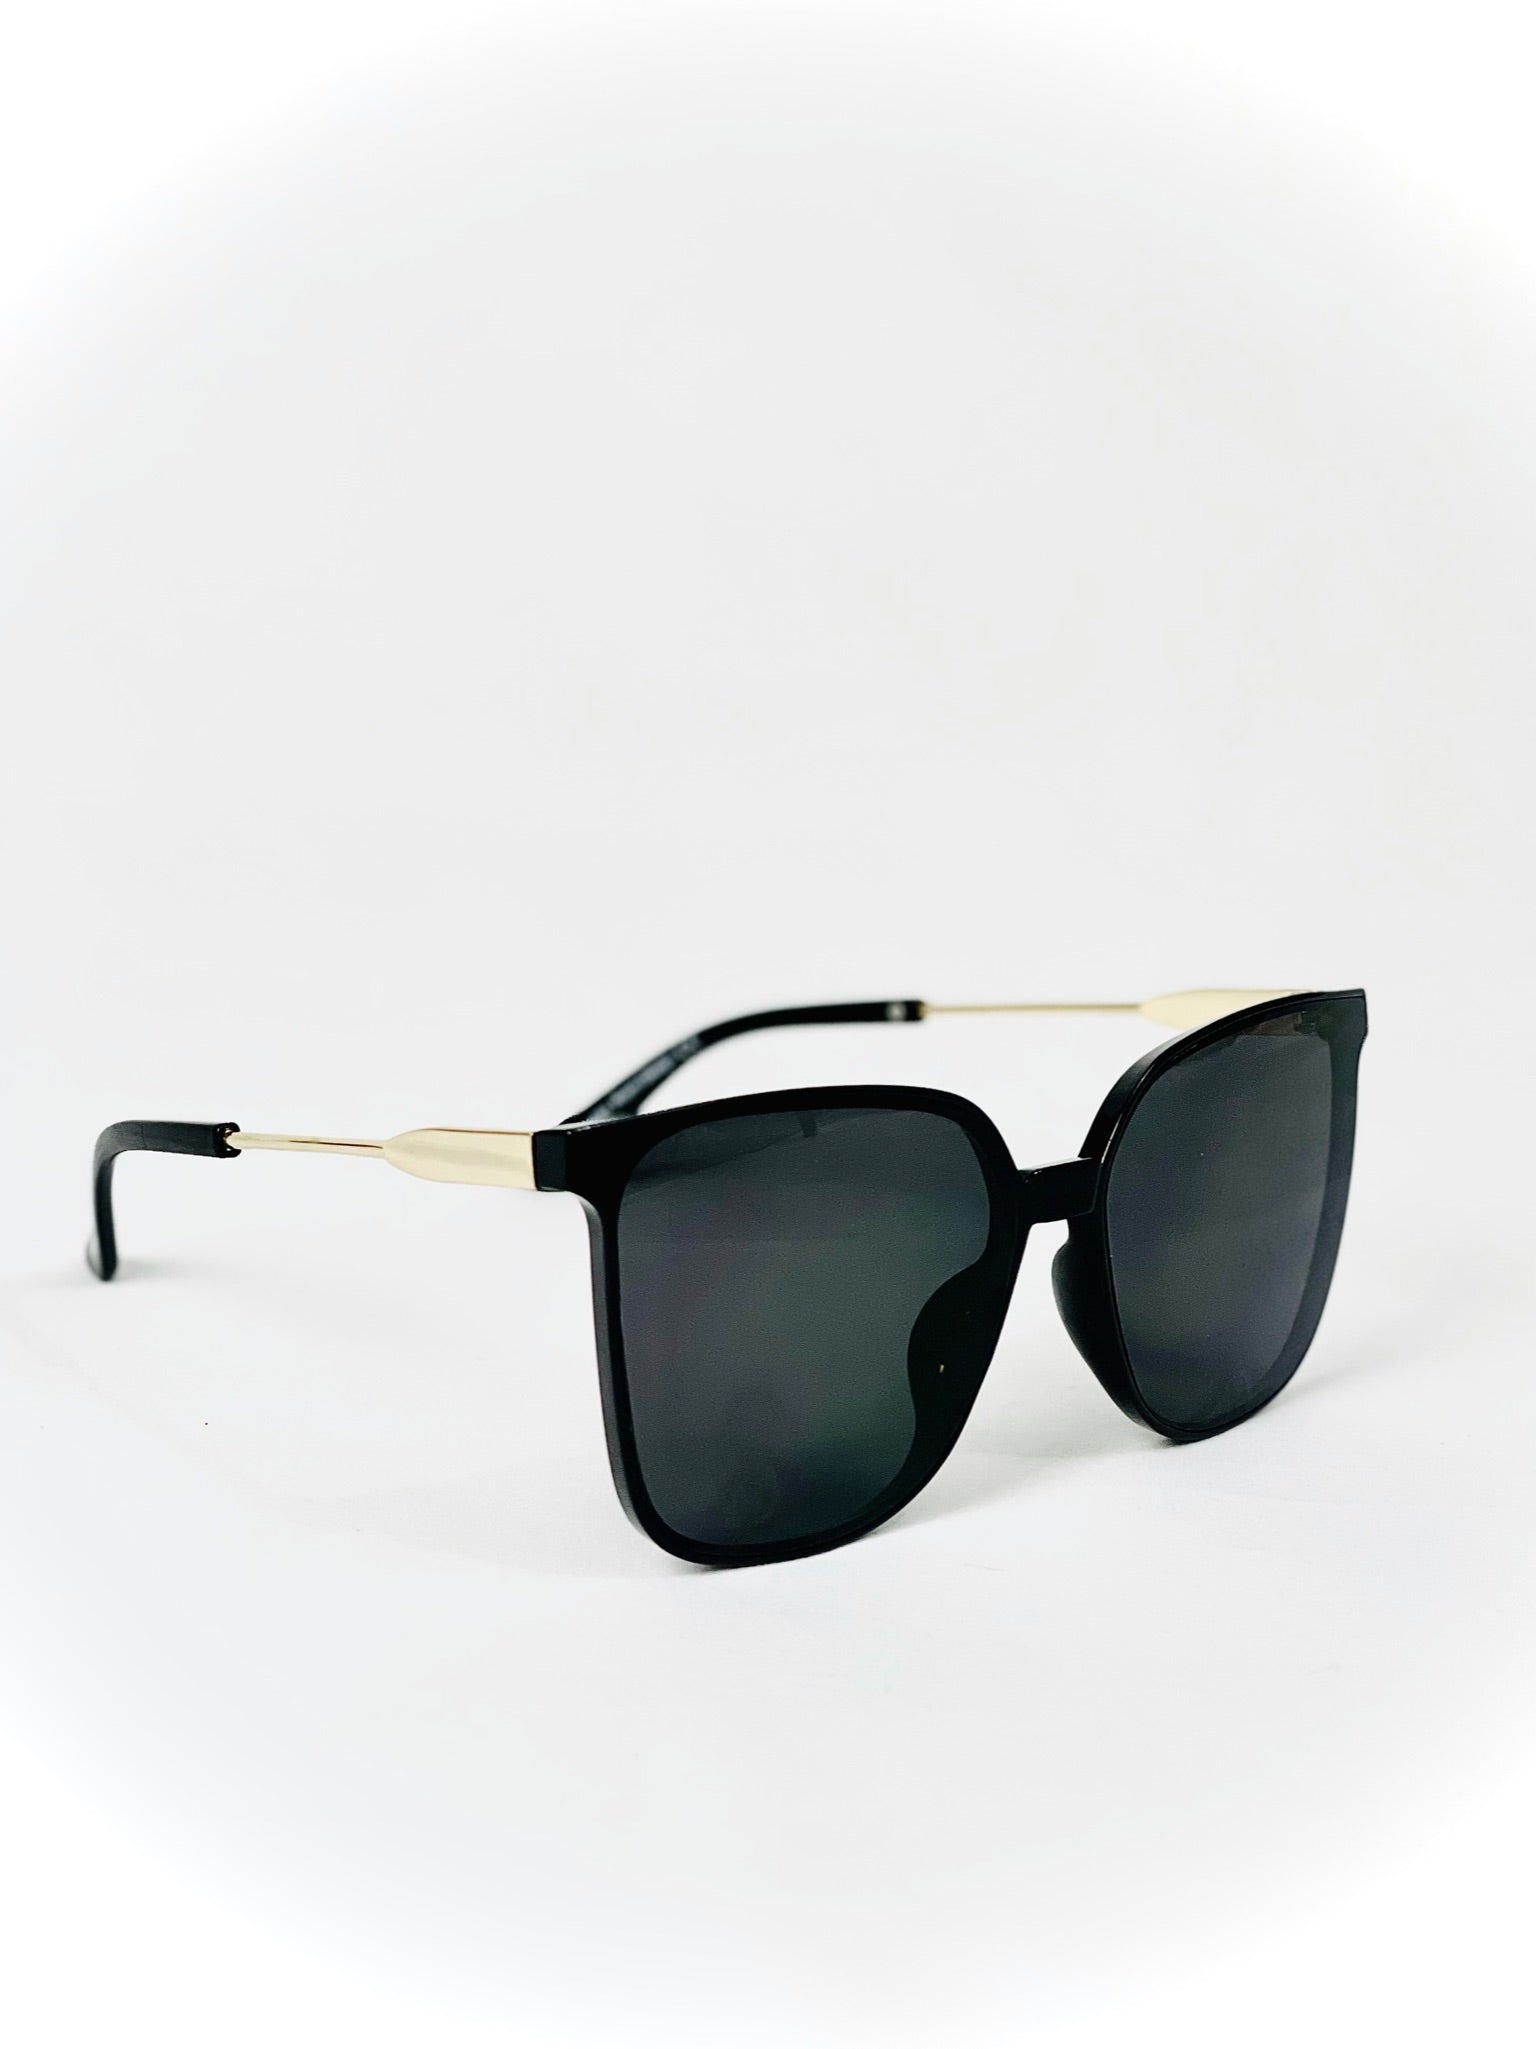 On The Boardwalk Black/Gold Sunglasses